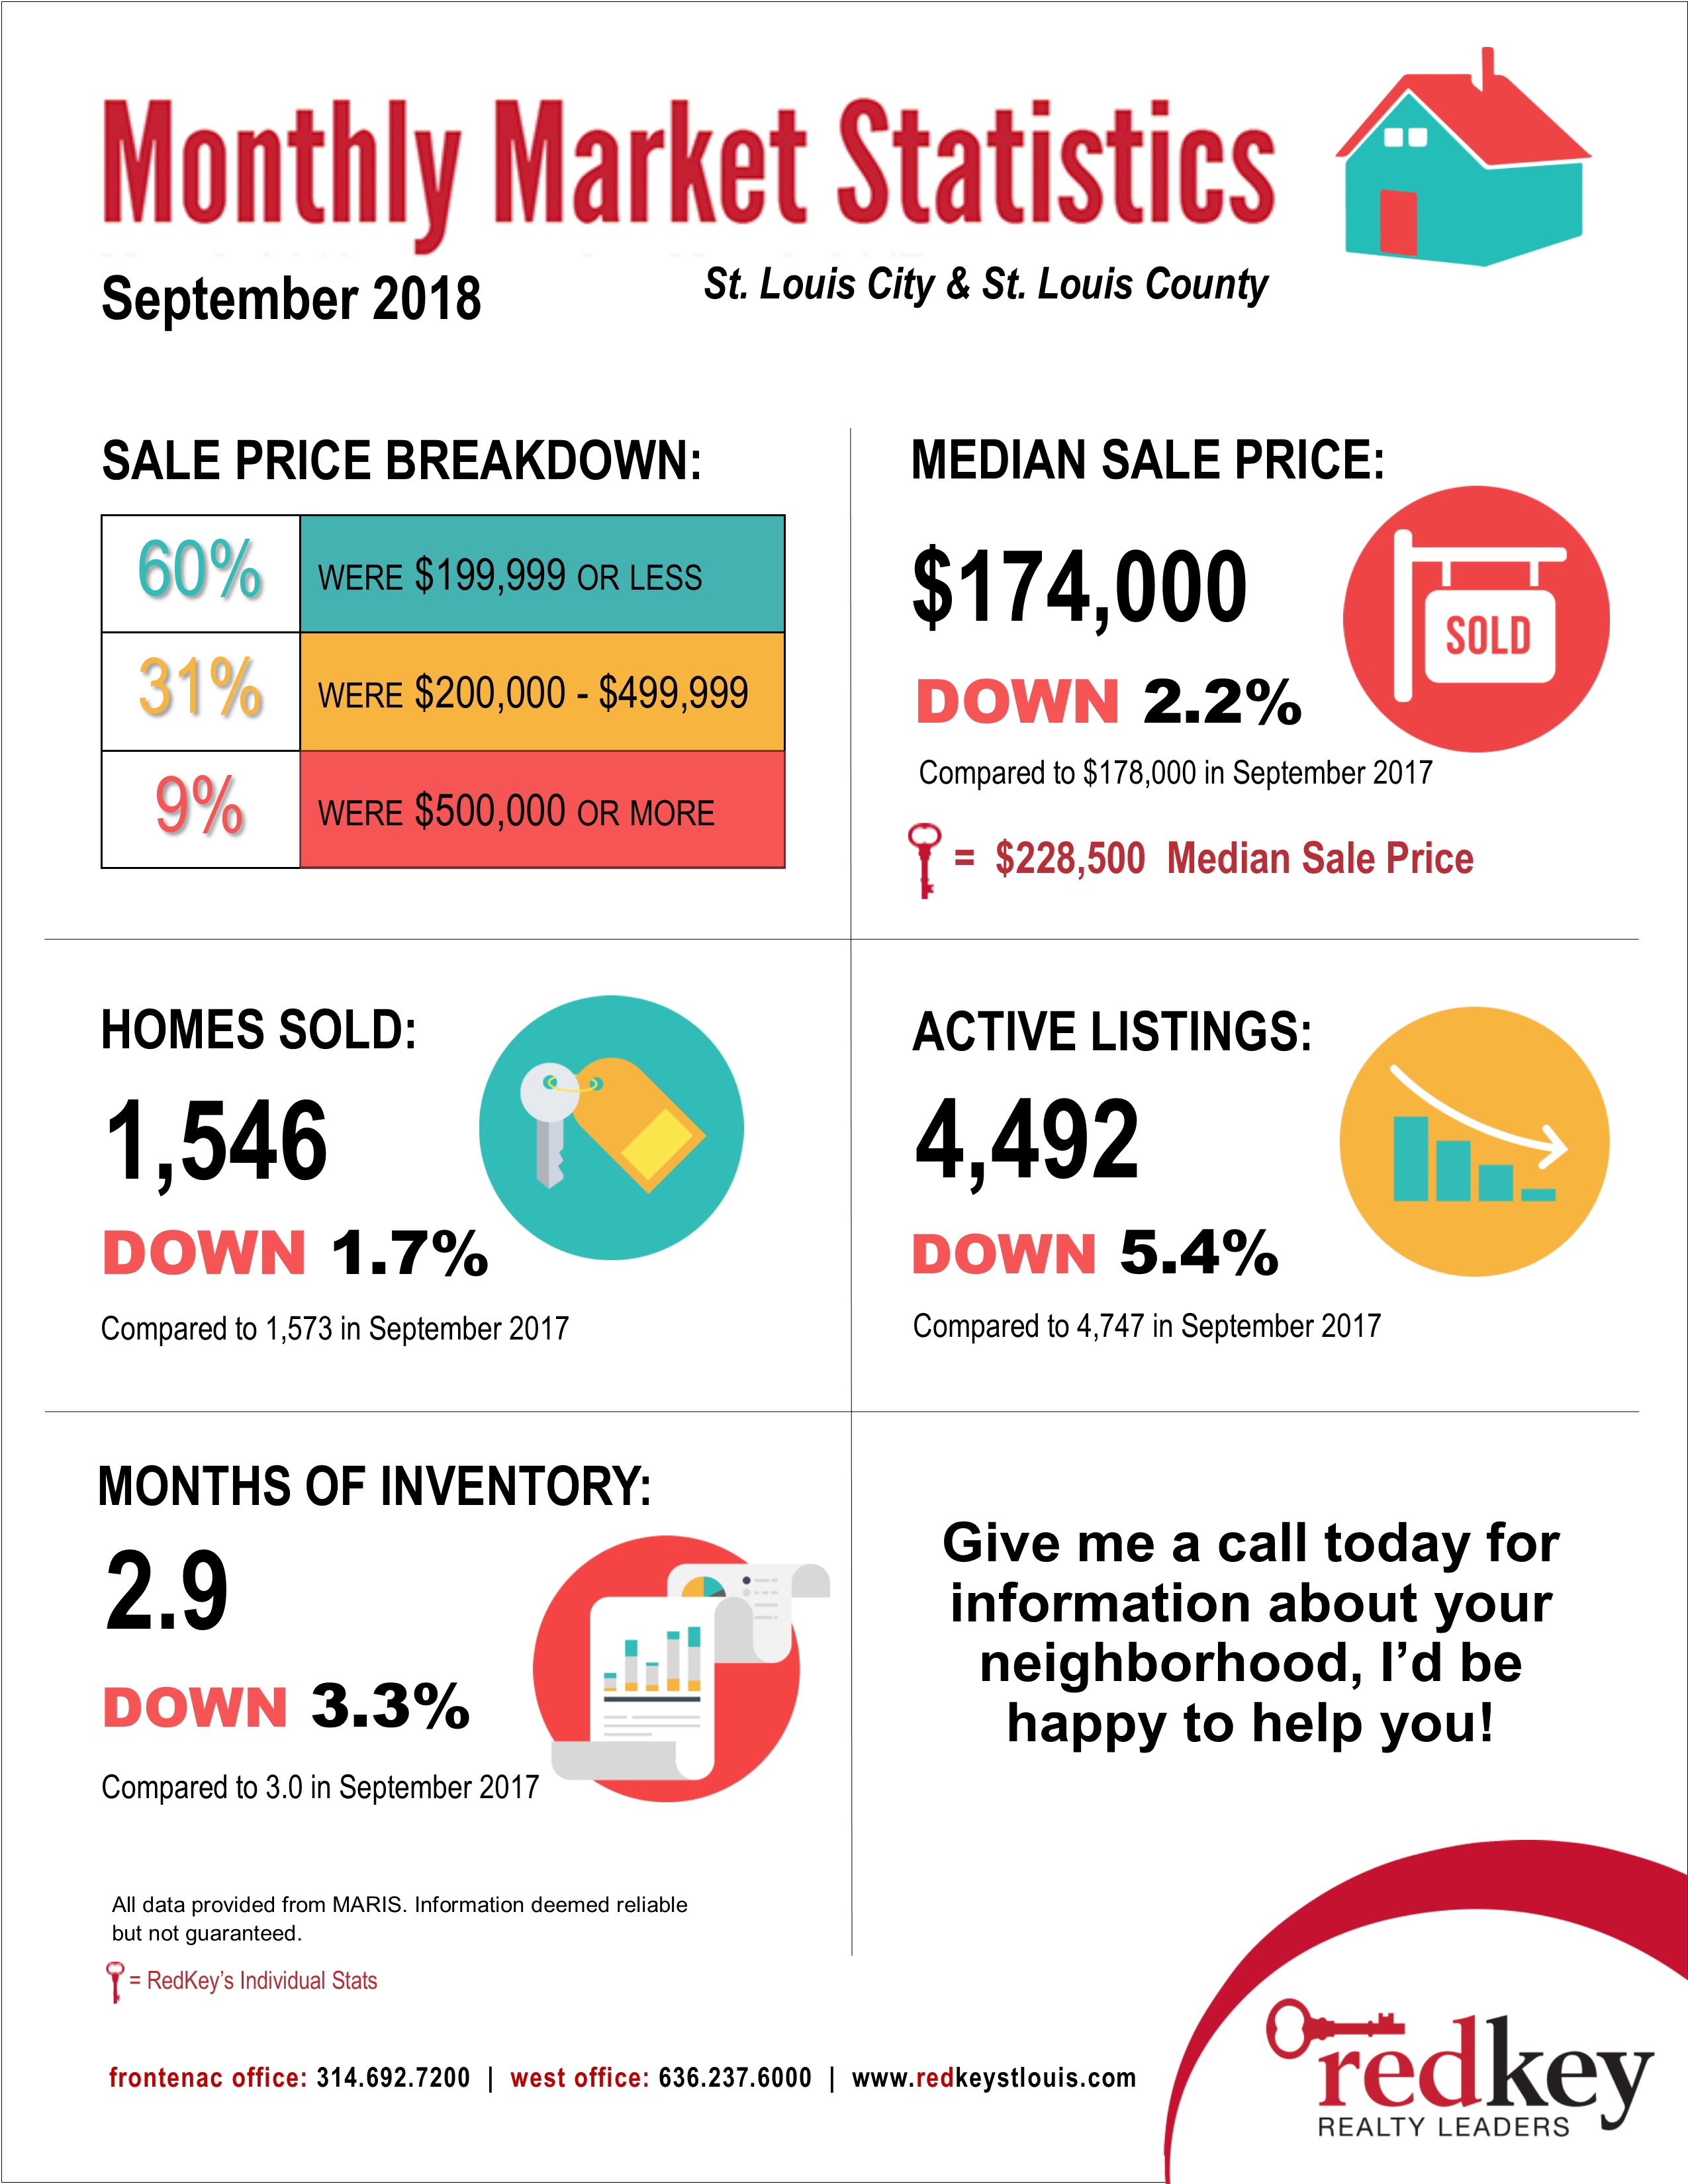 September Housing Stats for St. Louis